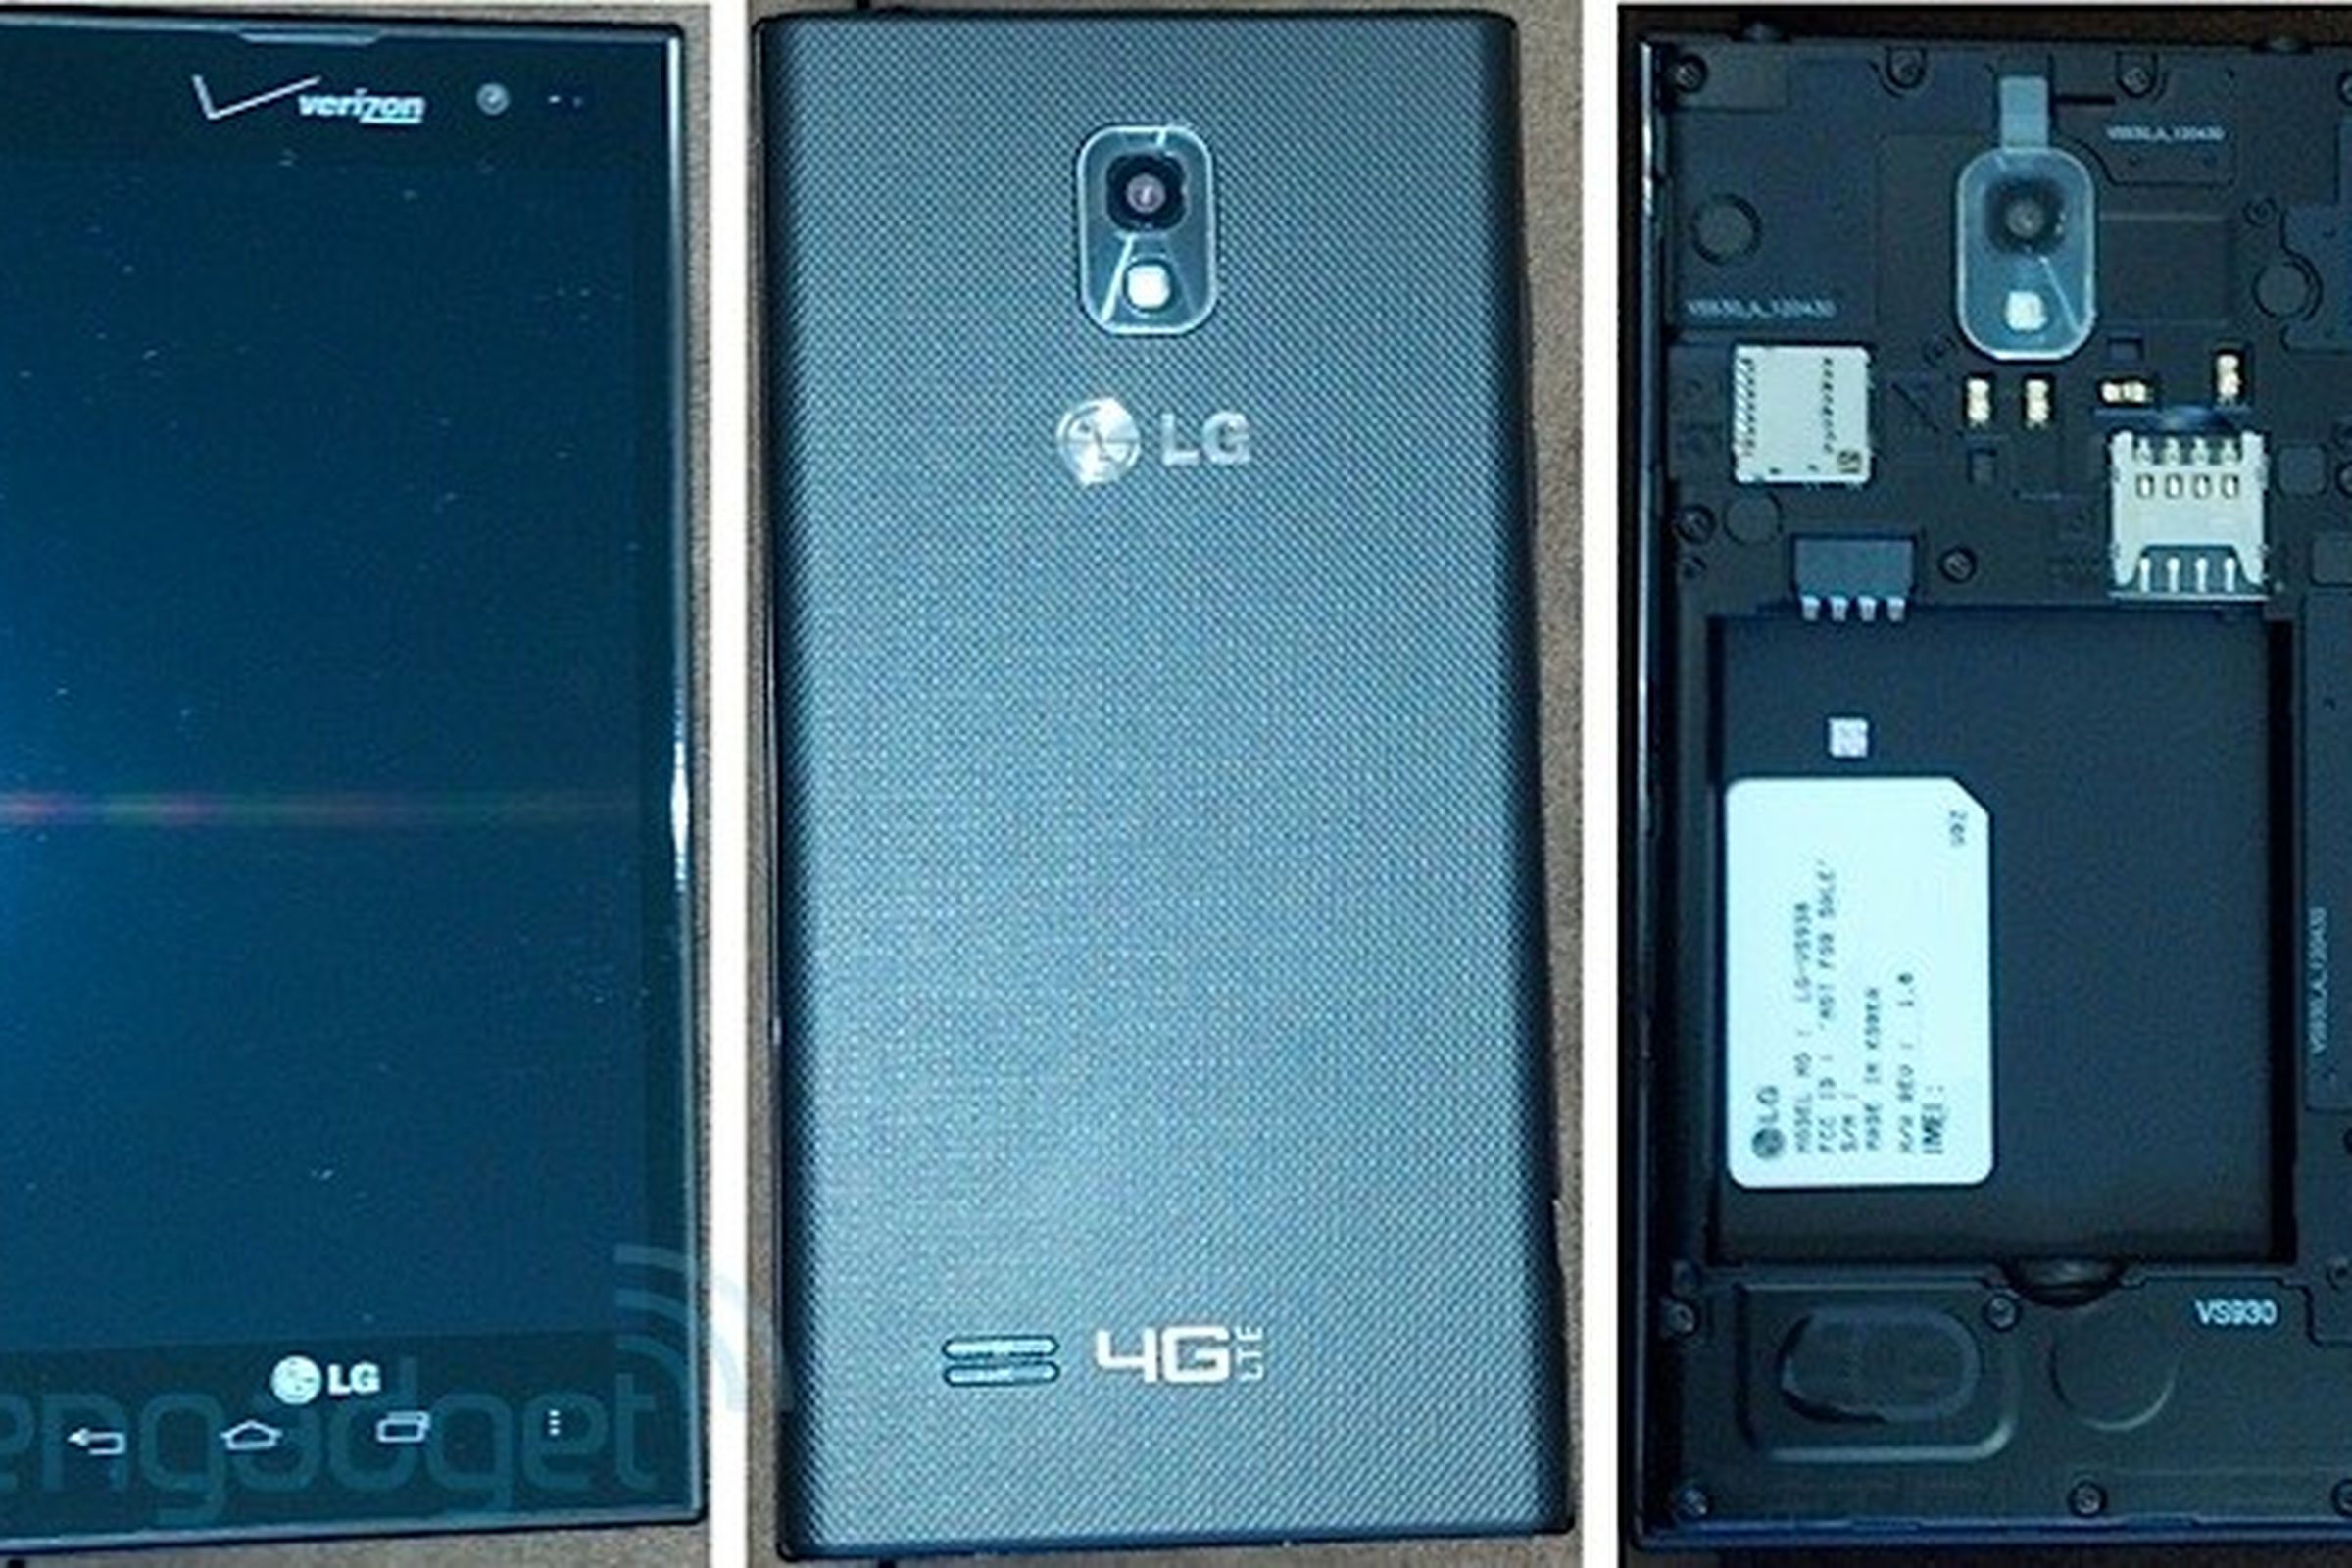 LG VS930